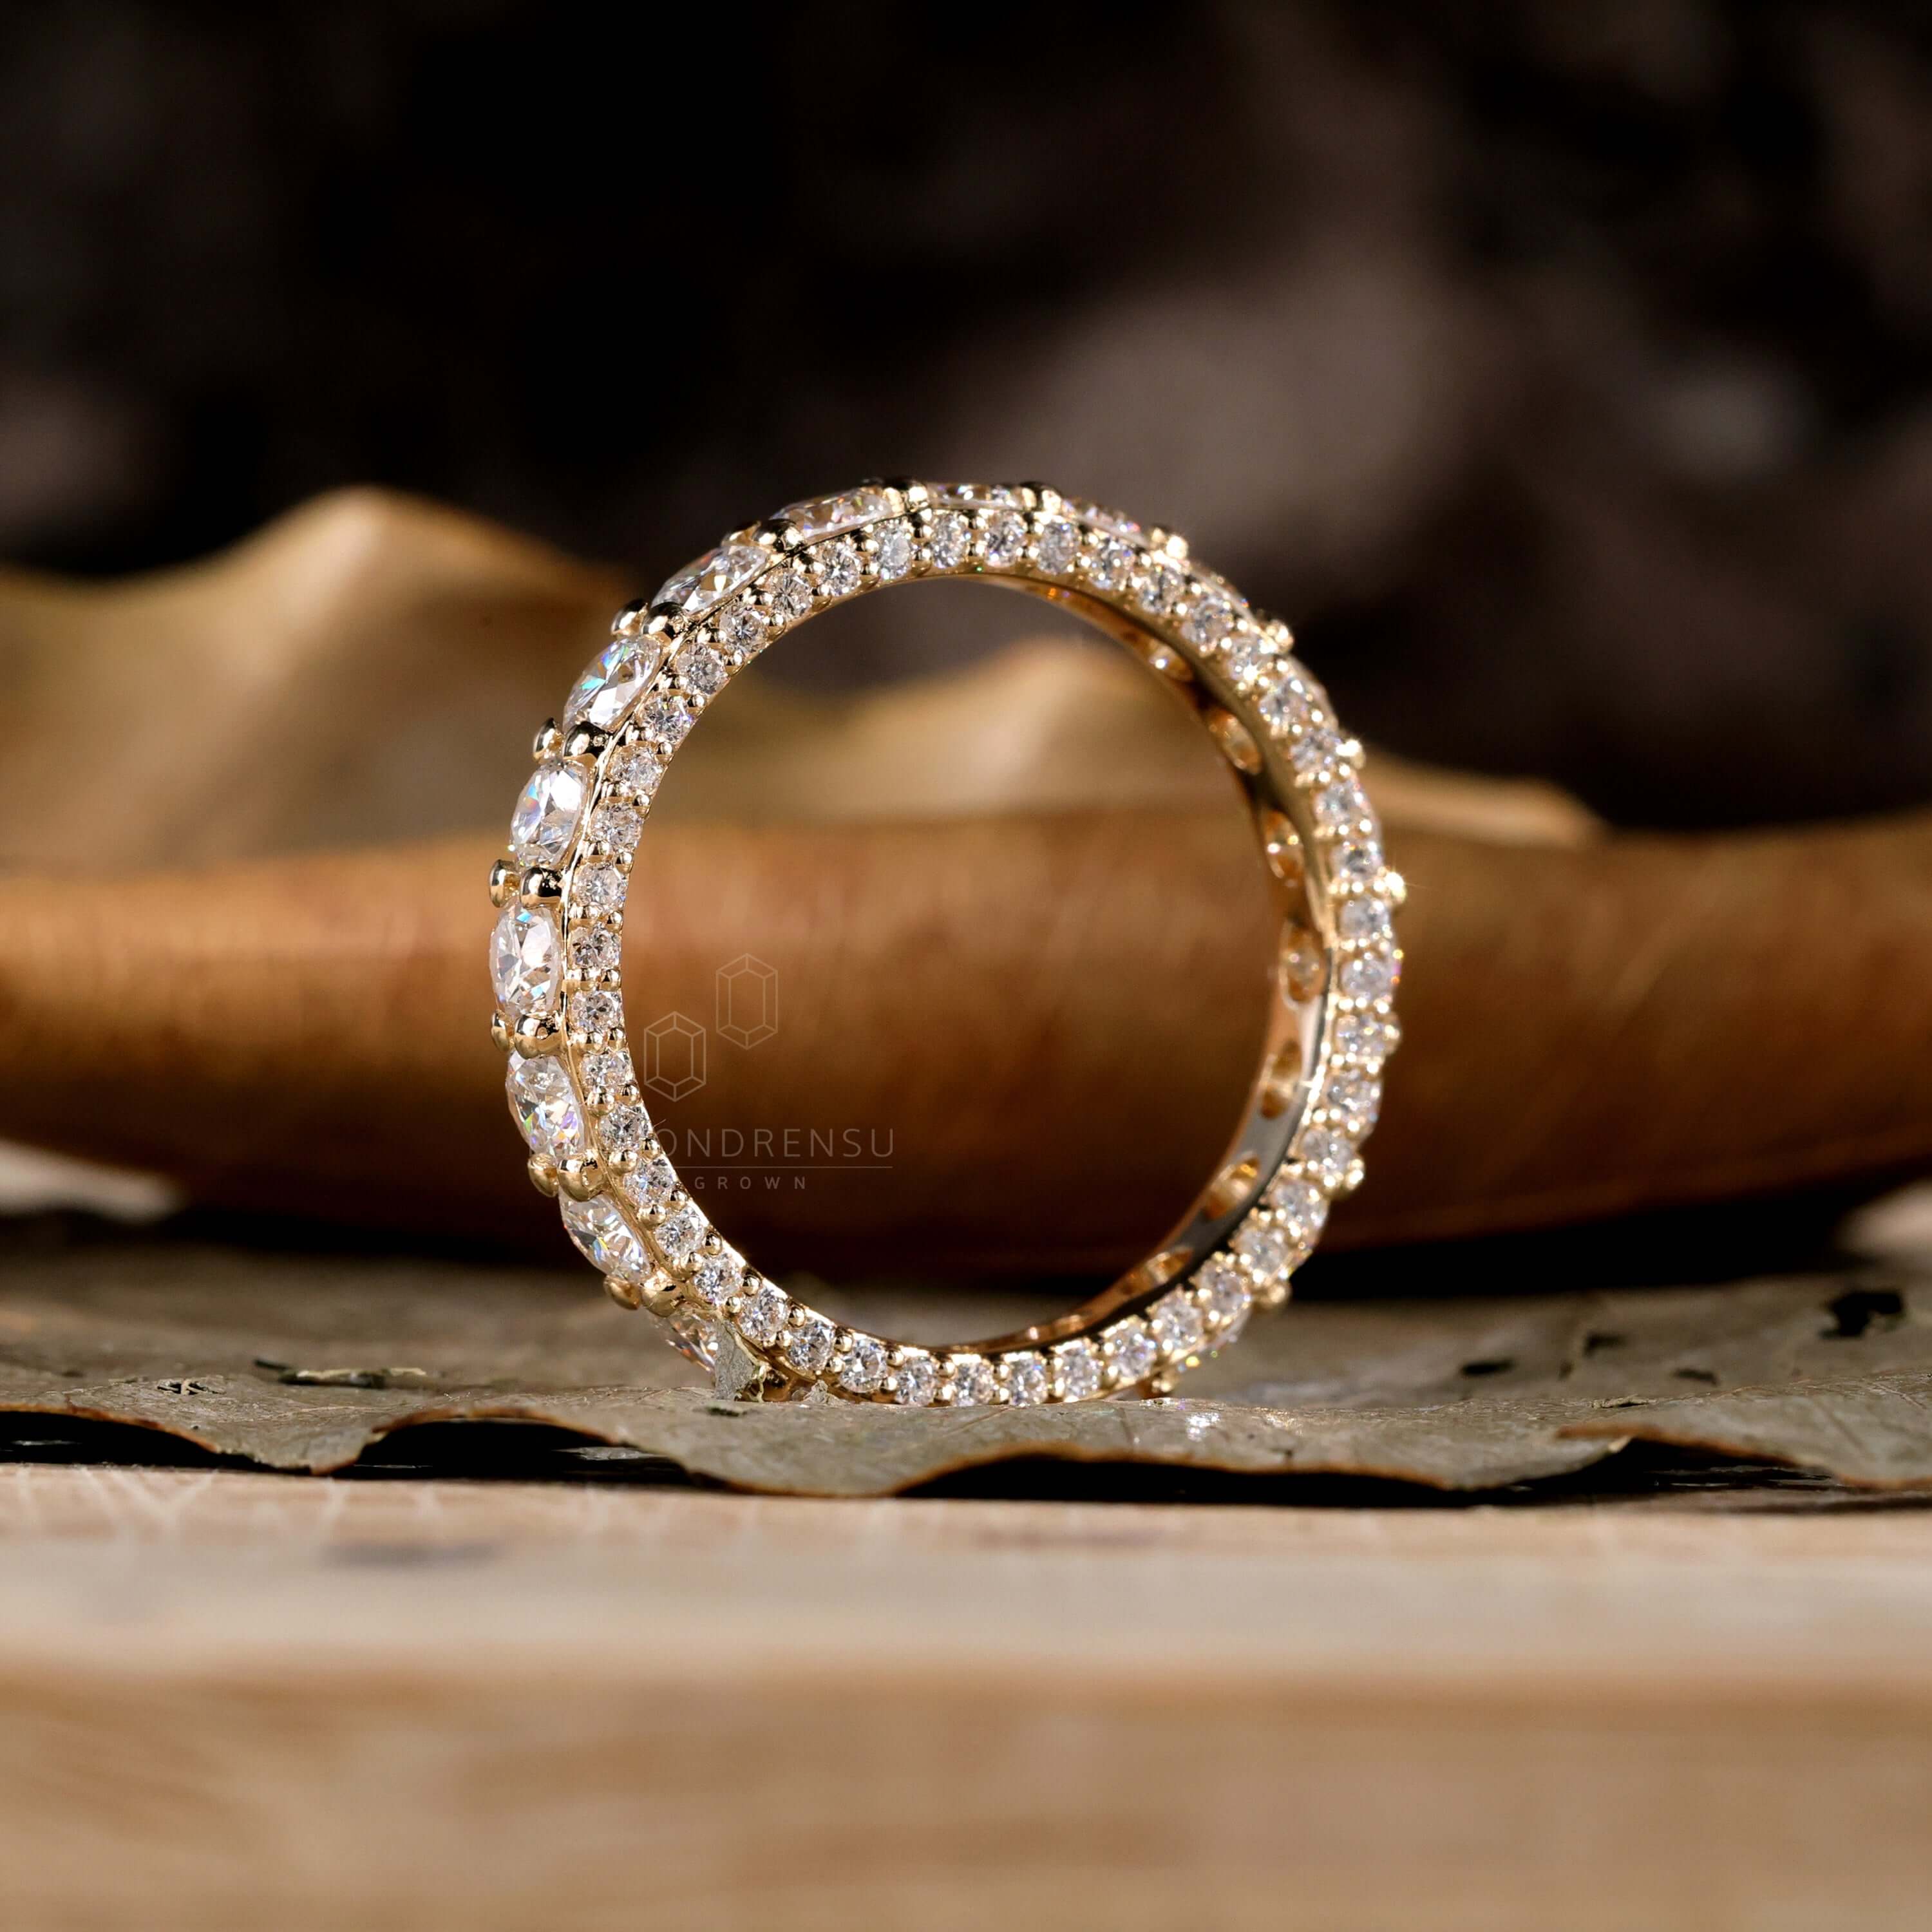 customized eternity ring - diamondrensu